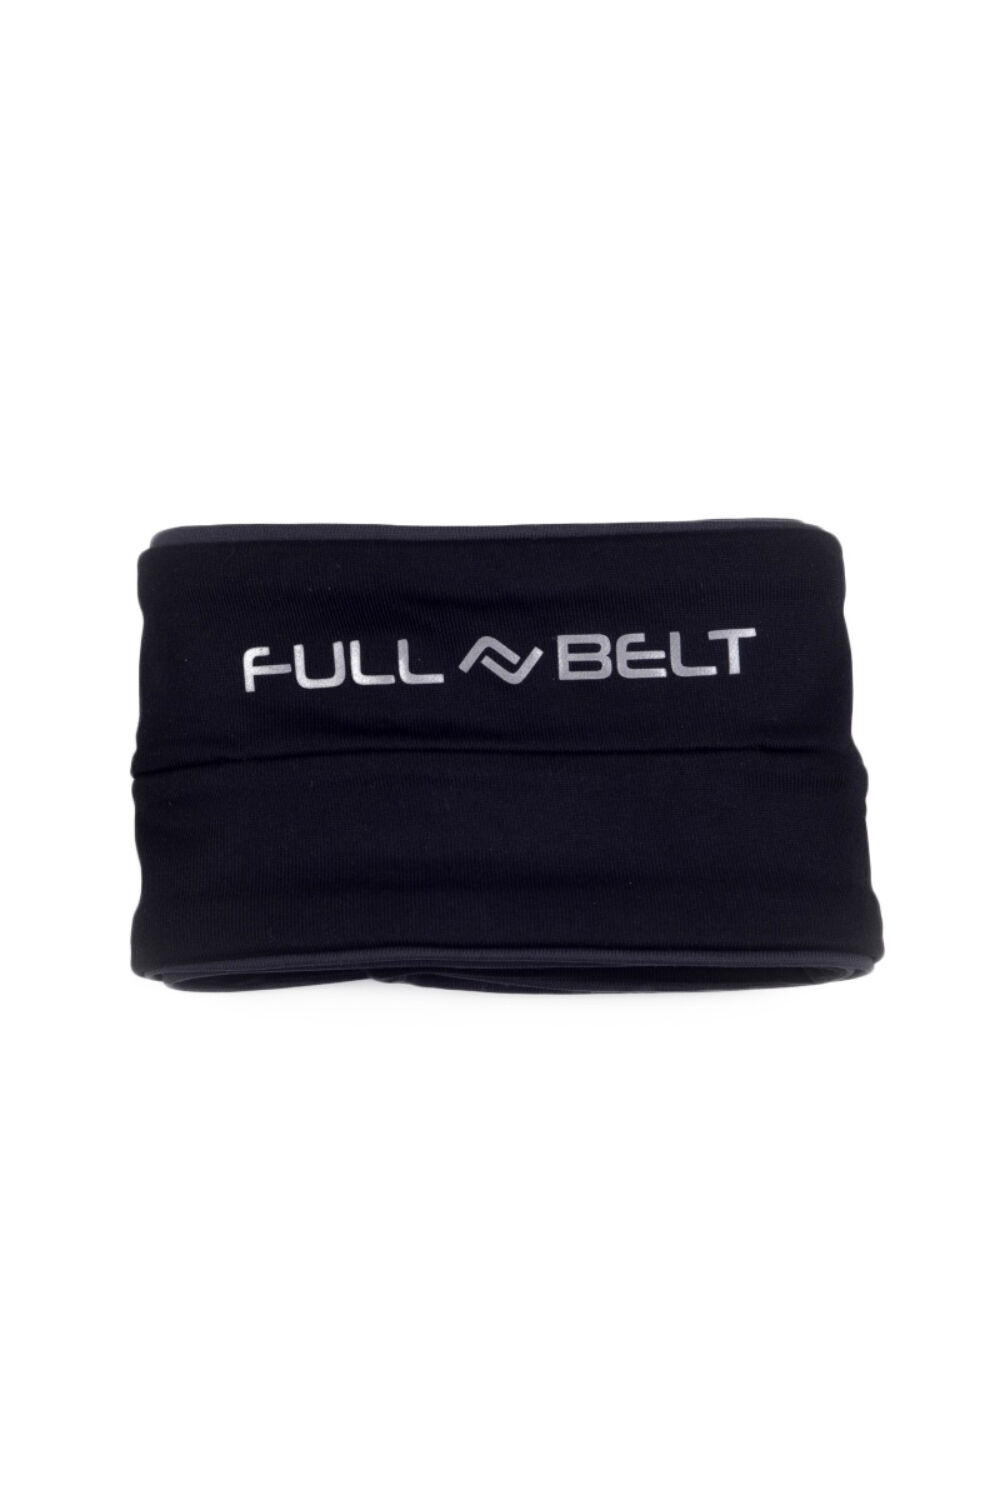 Indi-Go Full-Belt futóöv fekete-neonsárga 'L'